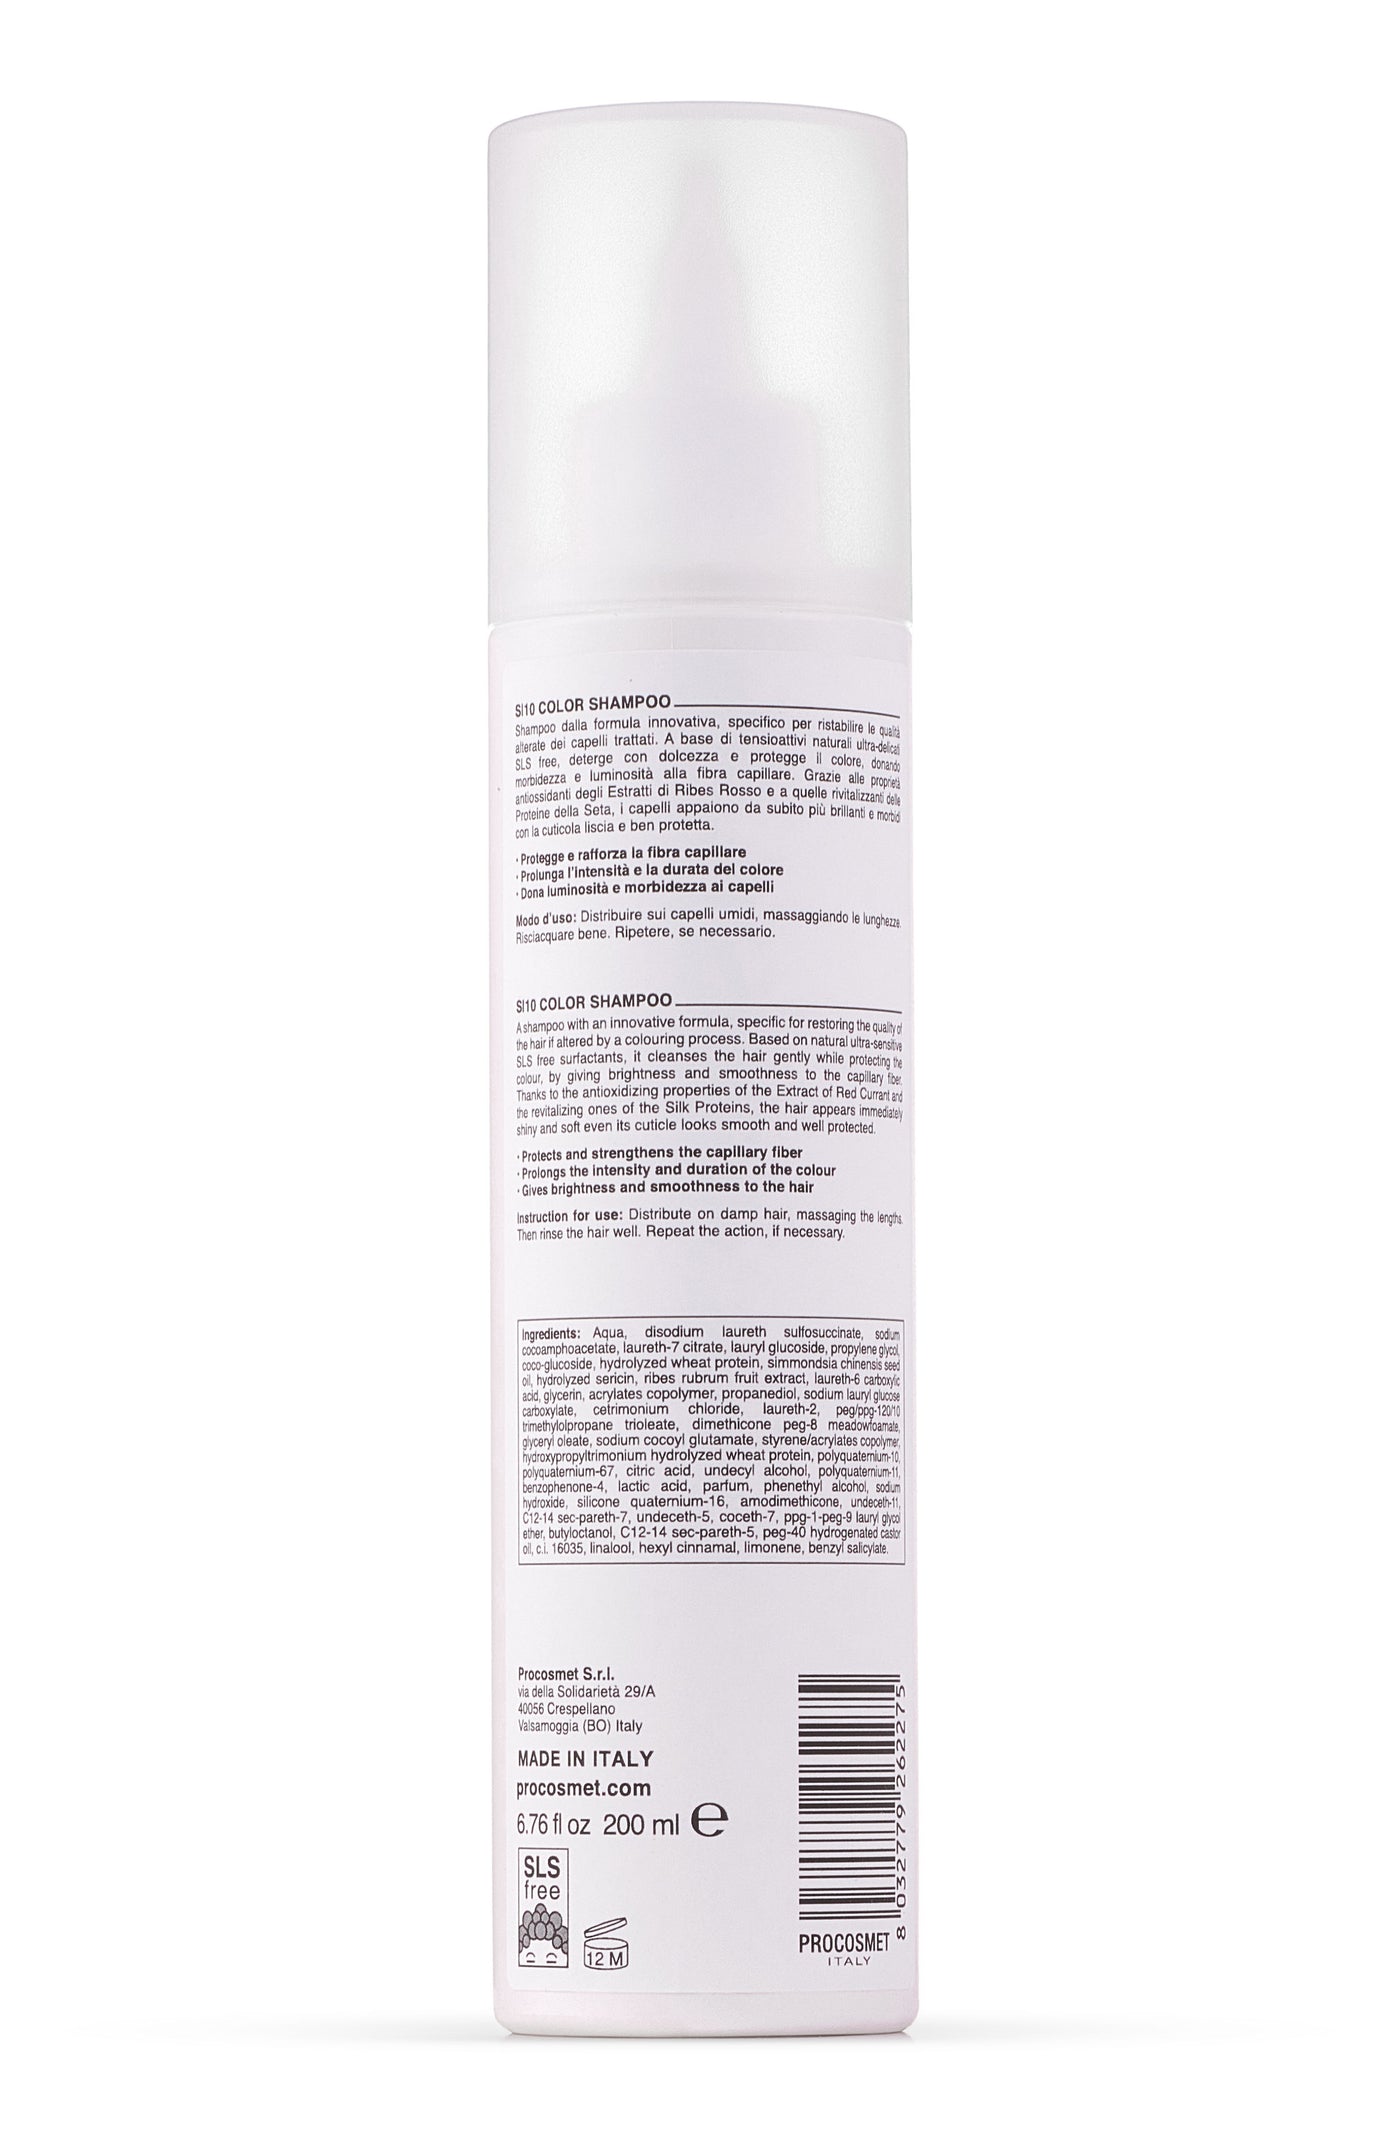 NAPURA S10 (6.76 fl oz) Professional Shampoo for Color Treated Hair